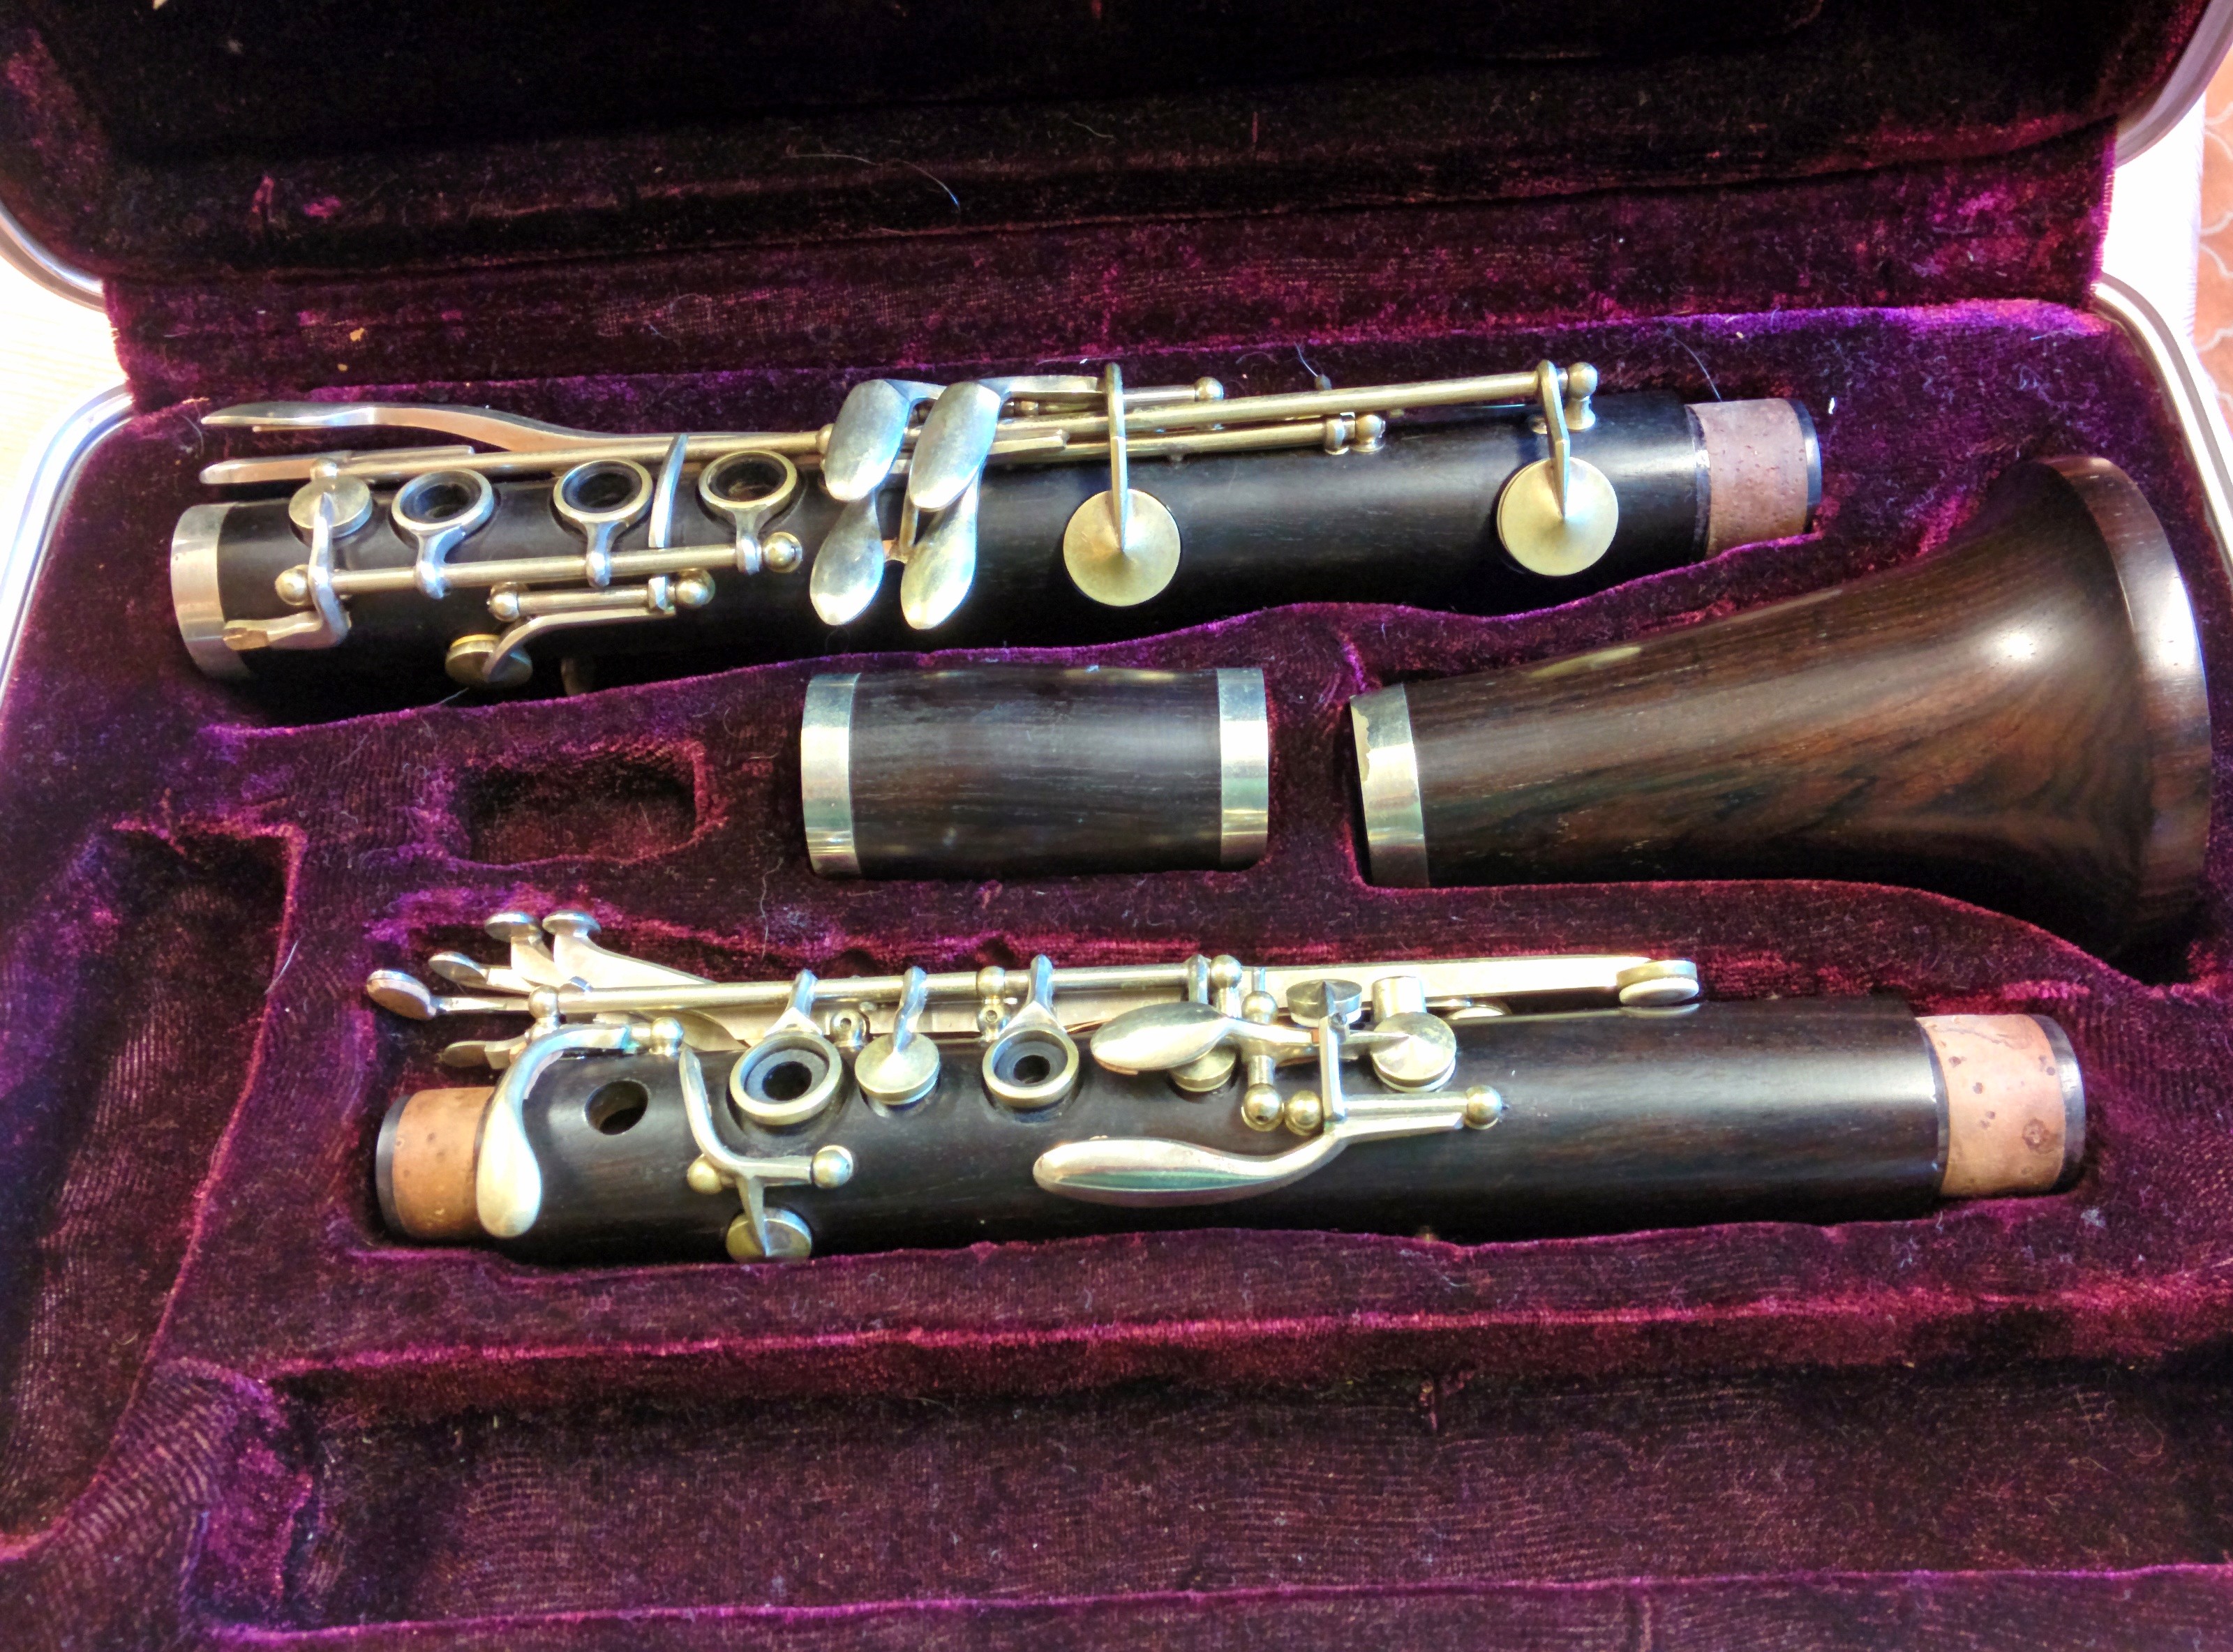 My Newark clarinet.